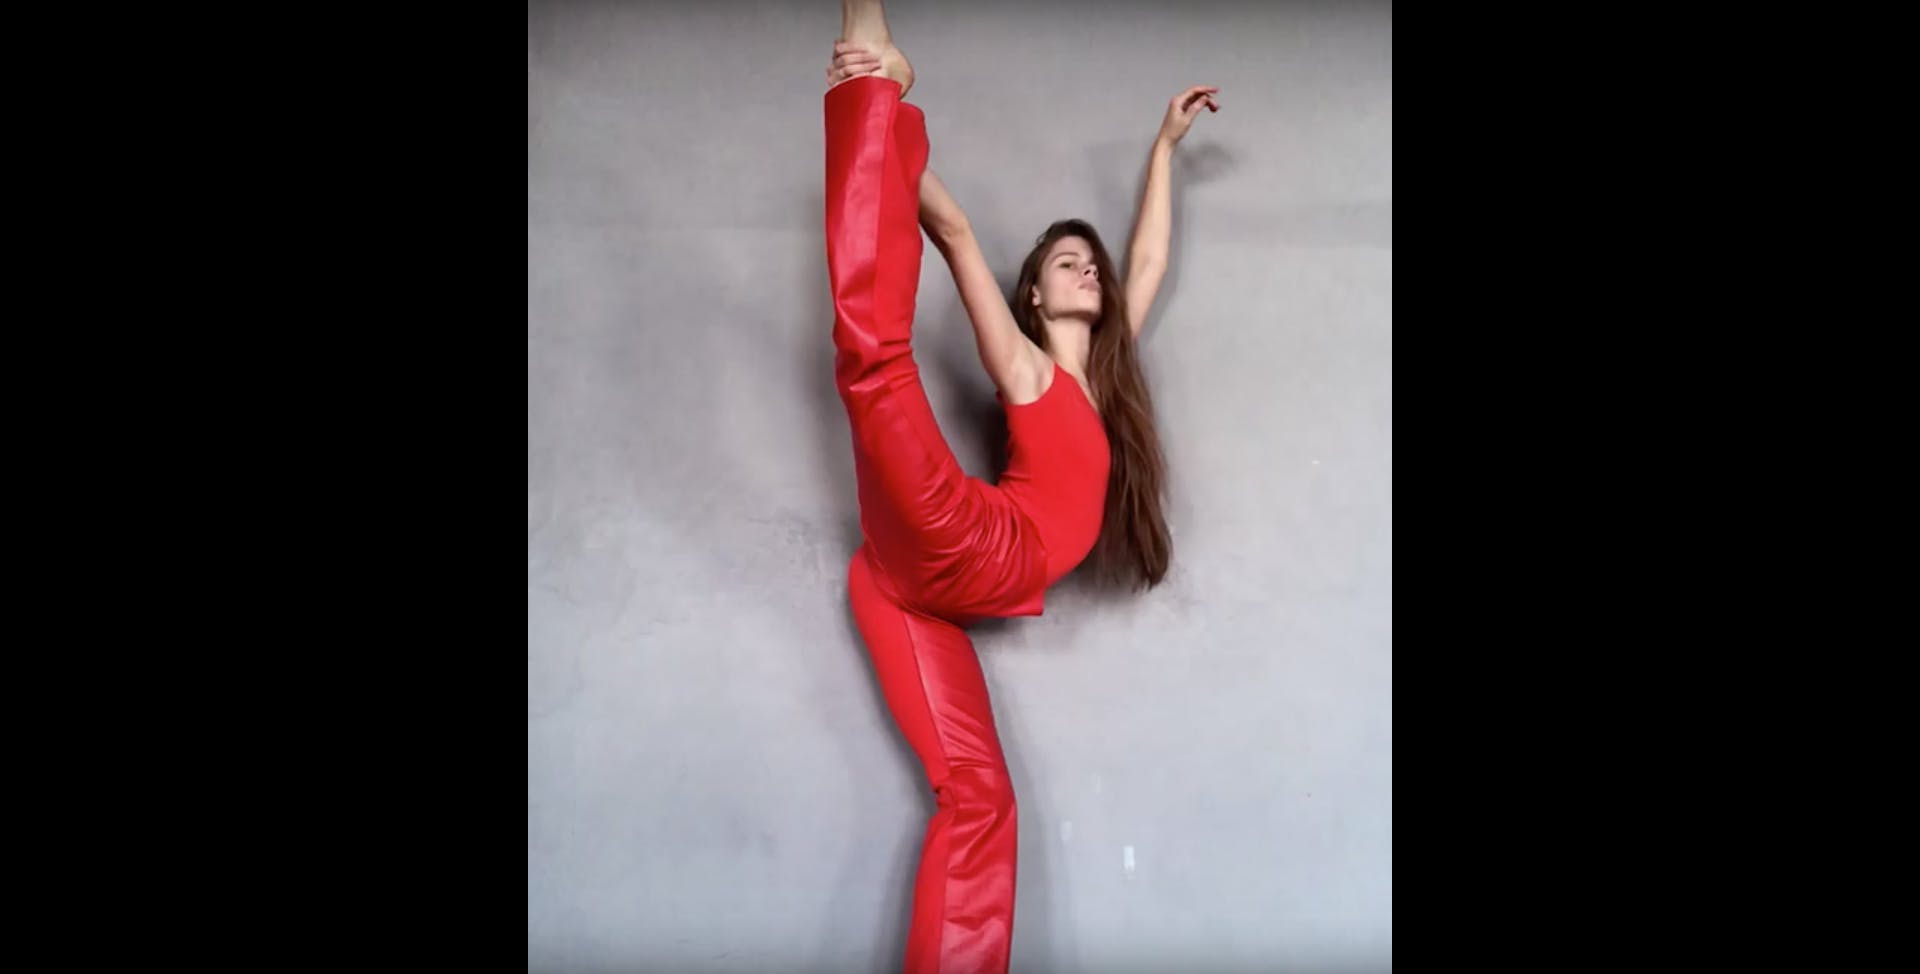 person human dance pose leisure activities acrobatic